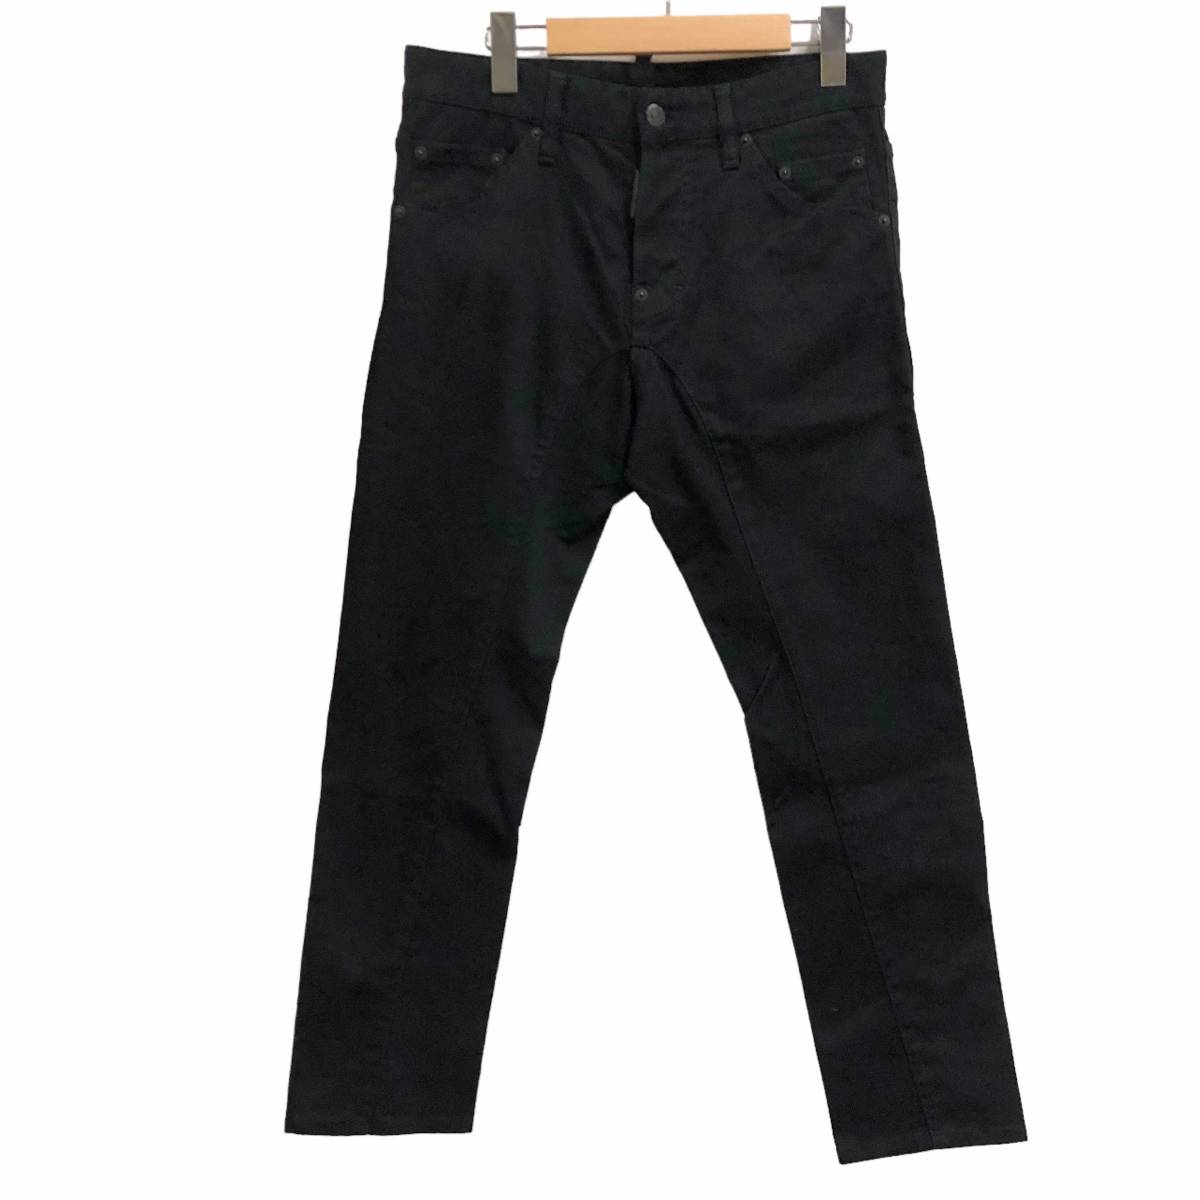 DSQUARED2 Dsquared Black Twisted Jeans черный кручение джинсы Denim S74LA0383 размер 44 магазин квитанция возможно 